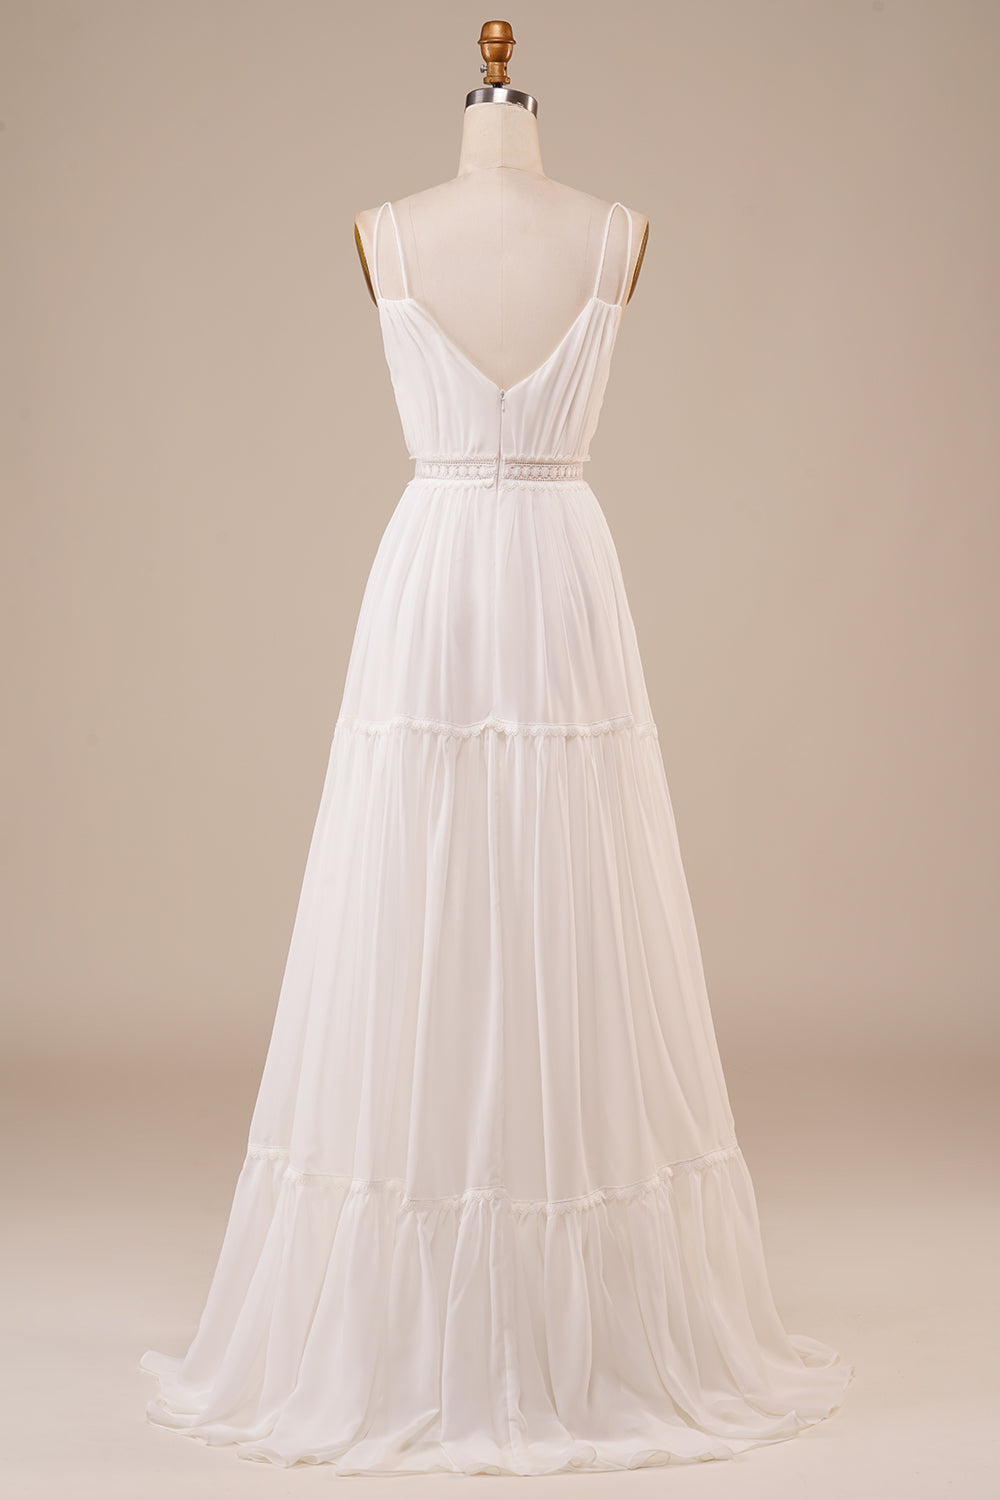 Ivory A Line Spaghetti Straps Long Wedding Dress